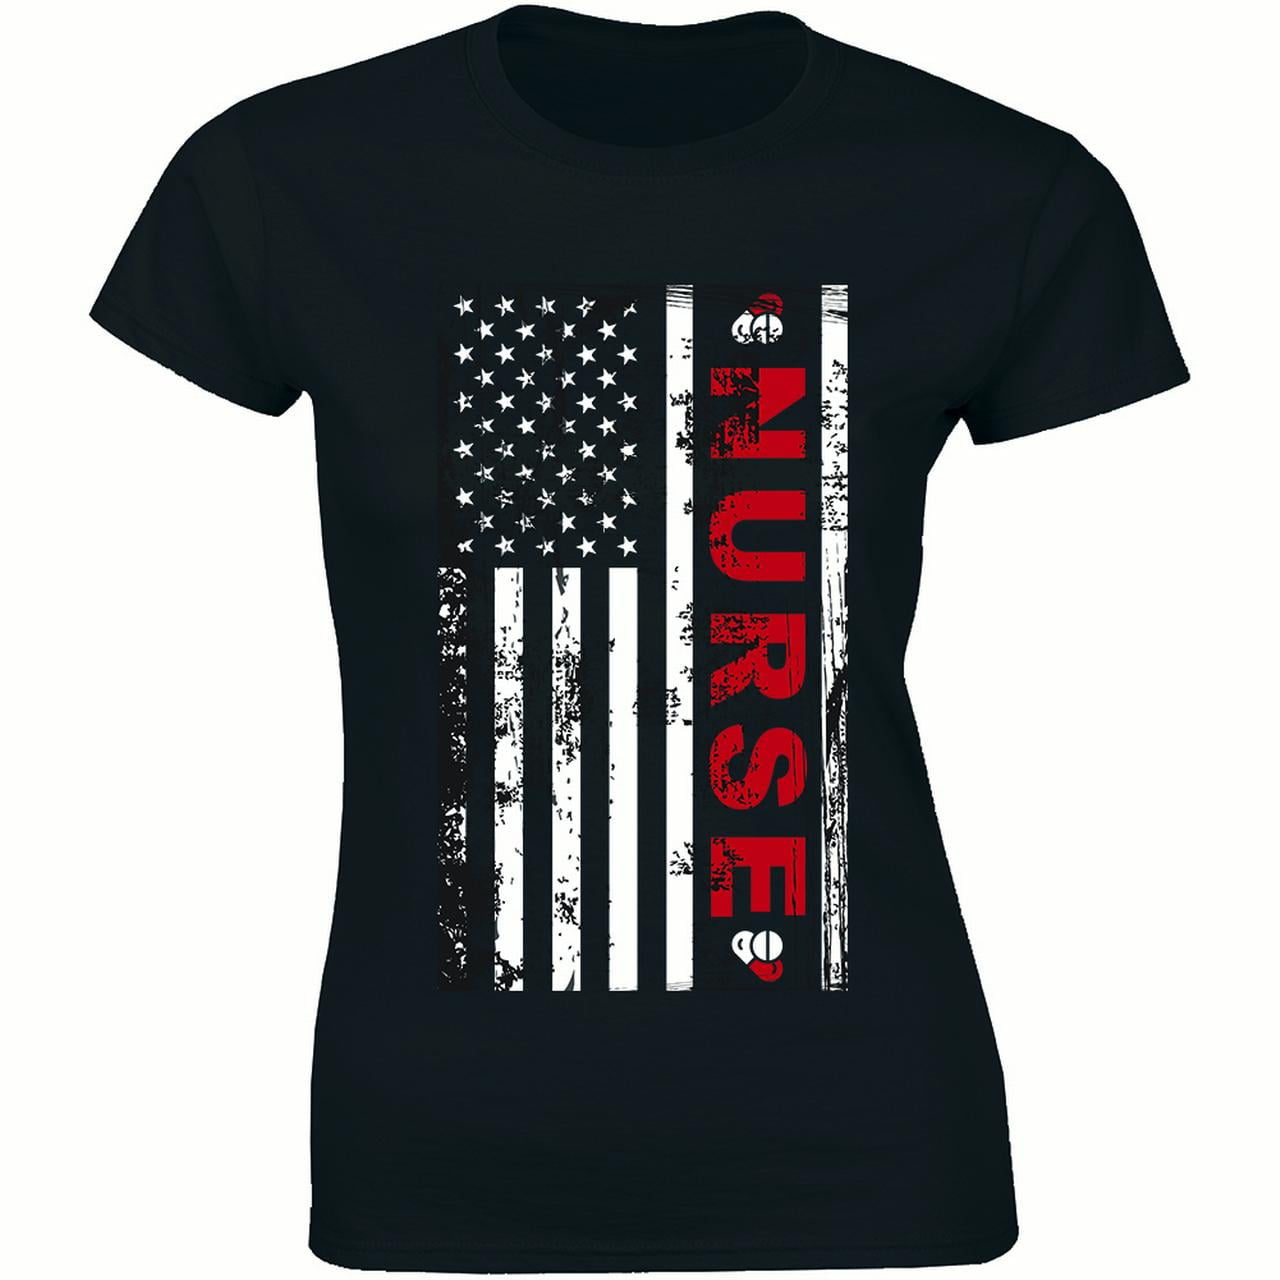 ER Nurse Short Sleeve t-Shirt Arkansas Made Distressed American Flag With Caduceus